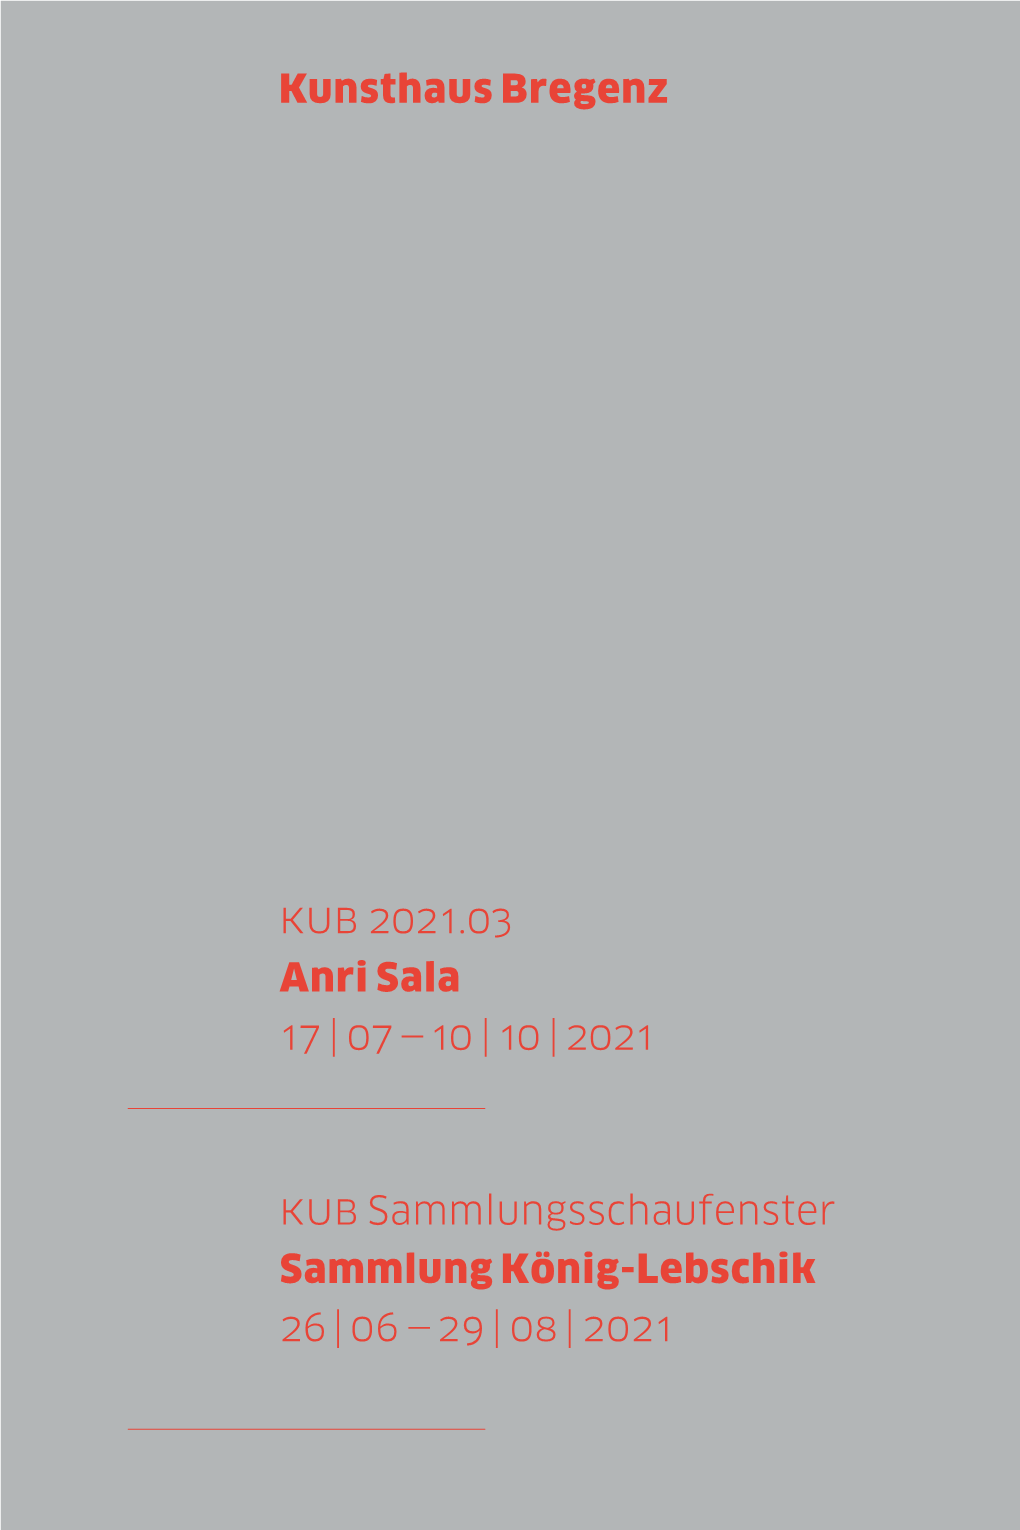 Kunsthaus Bregenz KUB 2021.03 Anri Sala 17 | 07 — 10